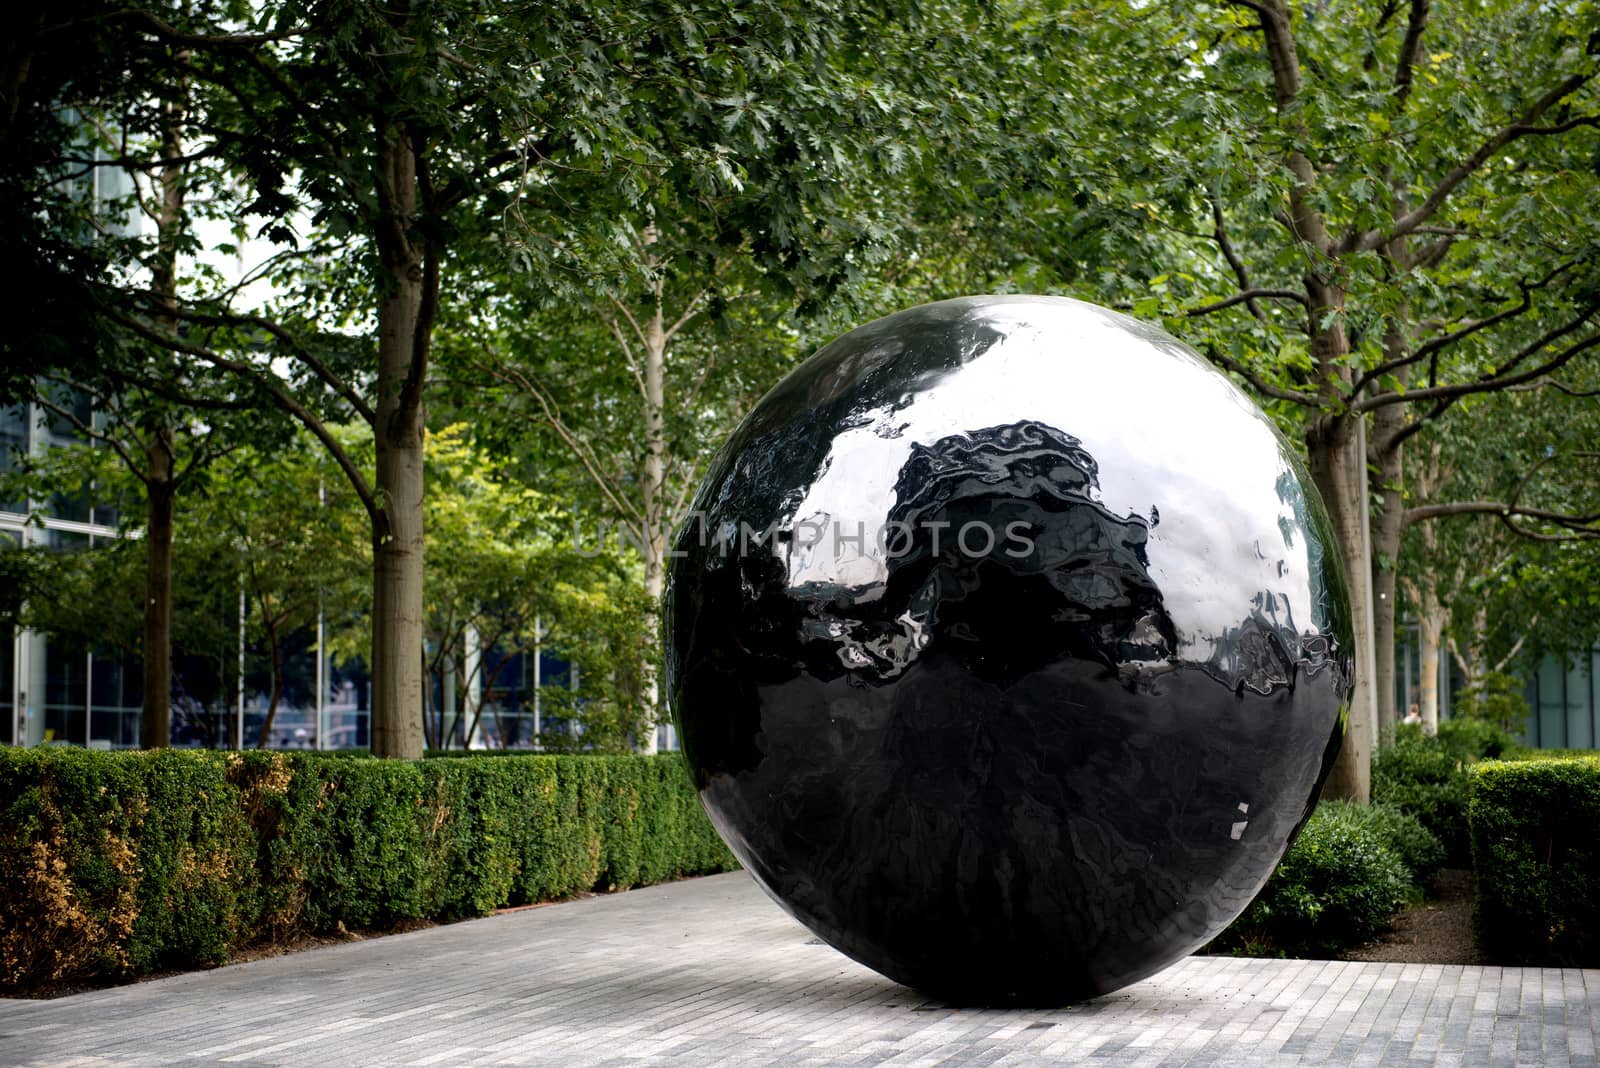 The big black sphere sculpture on the bank of River Thames.

Photographed using Nikon-D800E (36 megapixels) DSLR with AF-S NIKKOR 24-70 mm f/2.8G ED lens at focal length 70 mm, ISO 100, and exposure 1/60 sec at f/2.8.